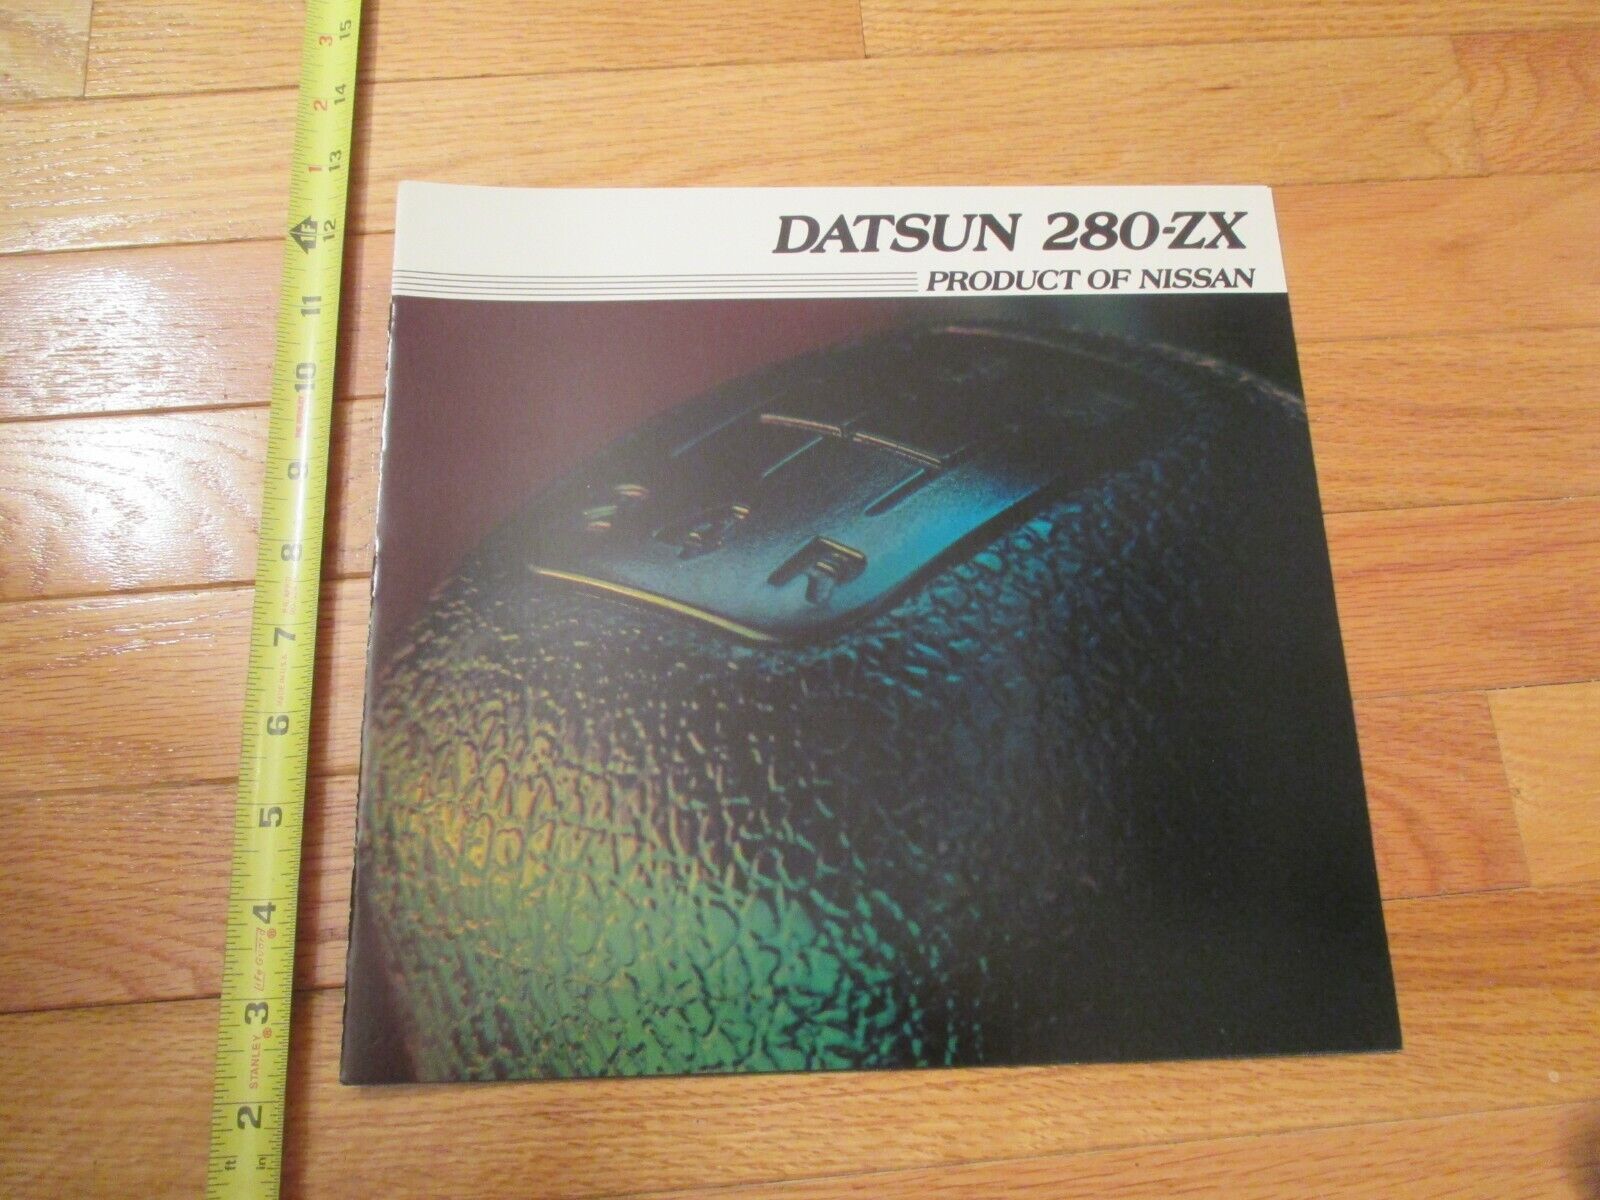 Datsun 280 zx 1982 Automobile Dealer Car Truck Sales Brochure